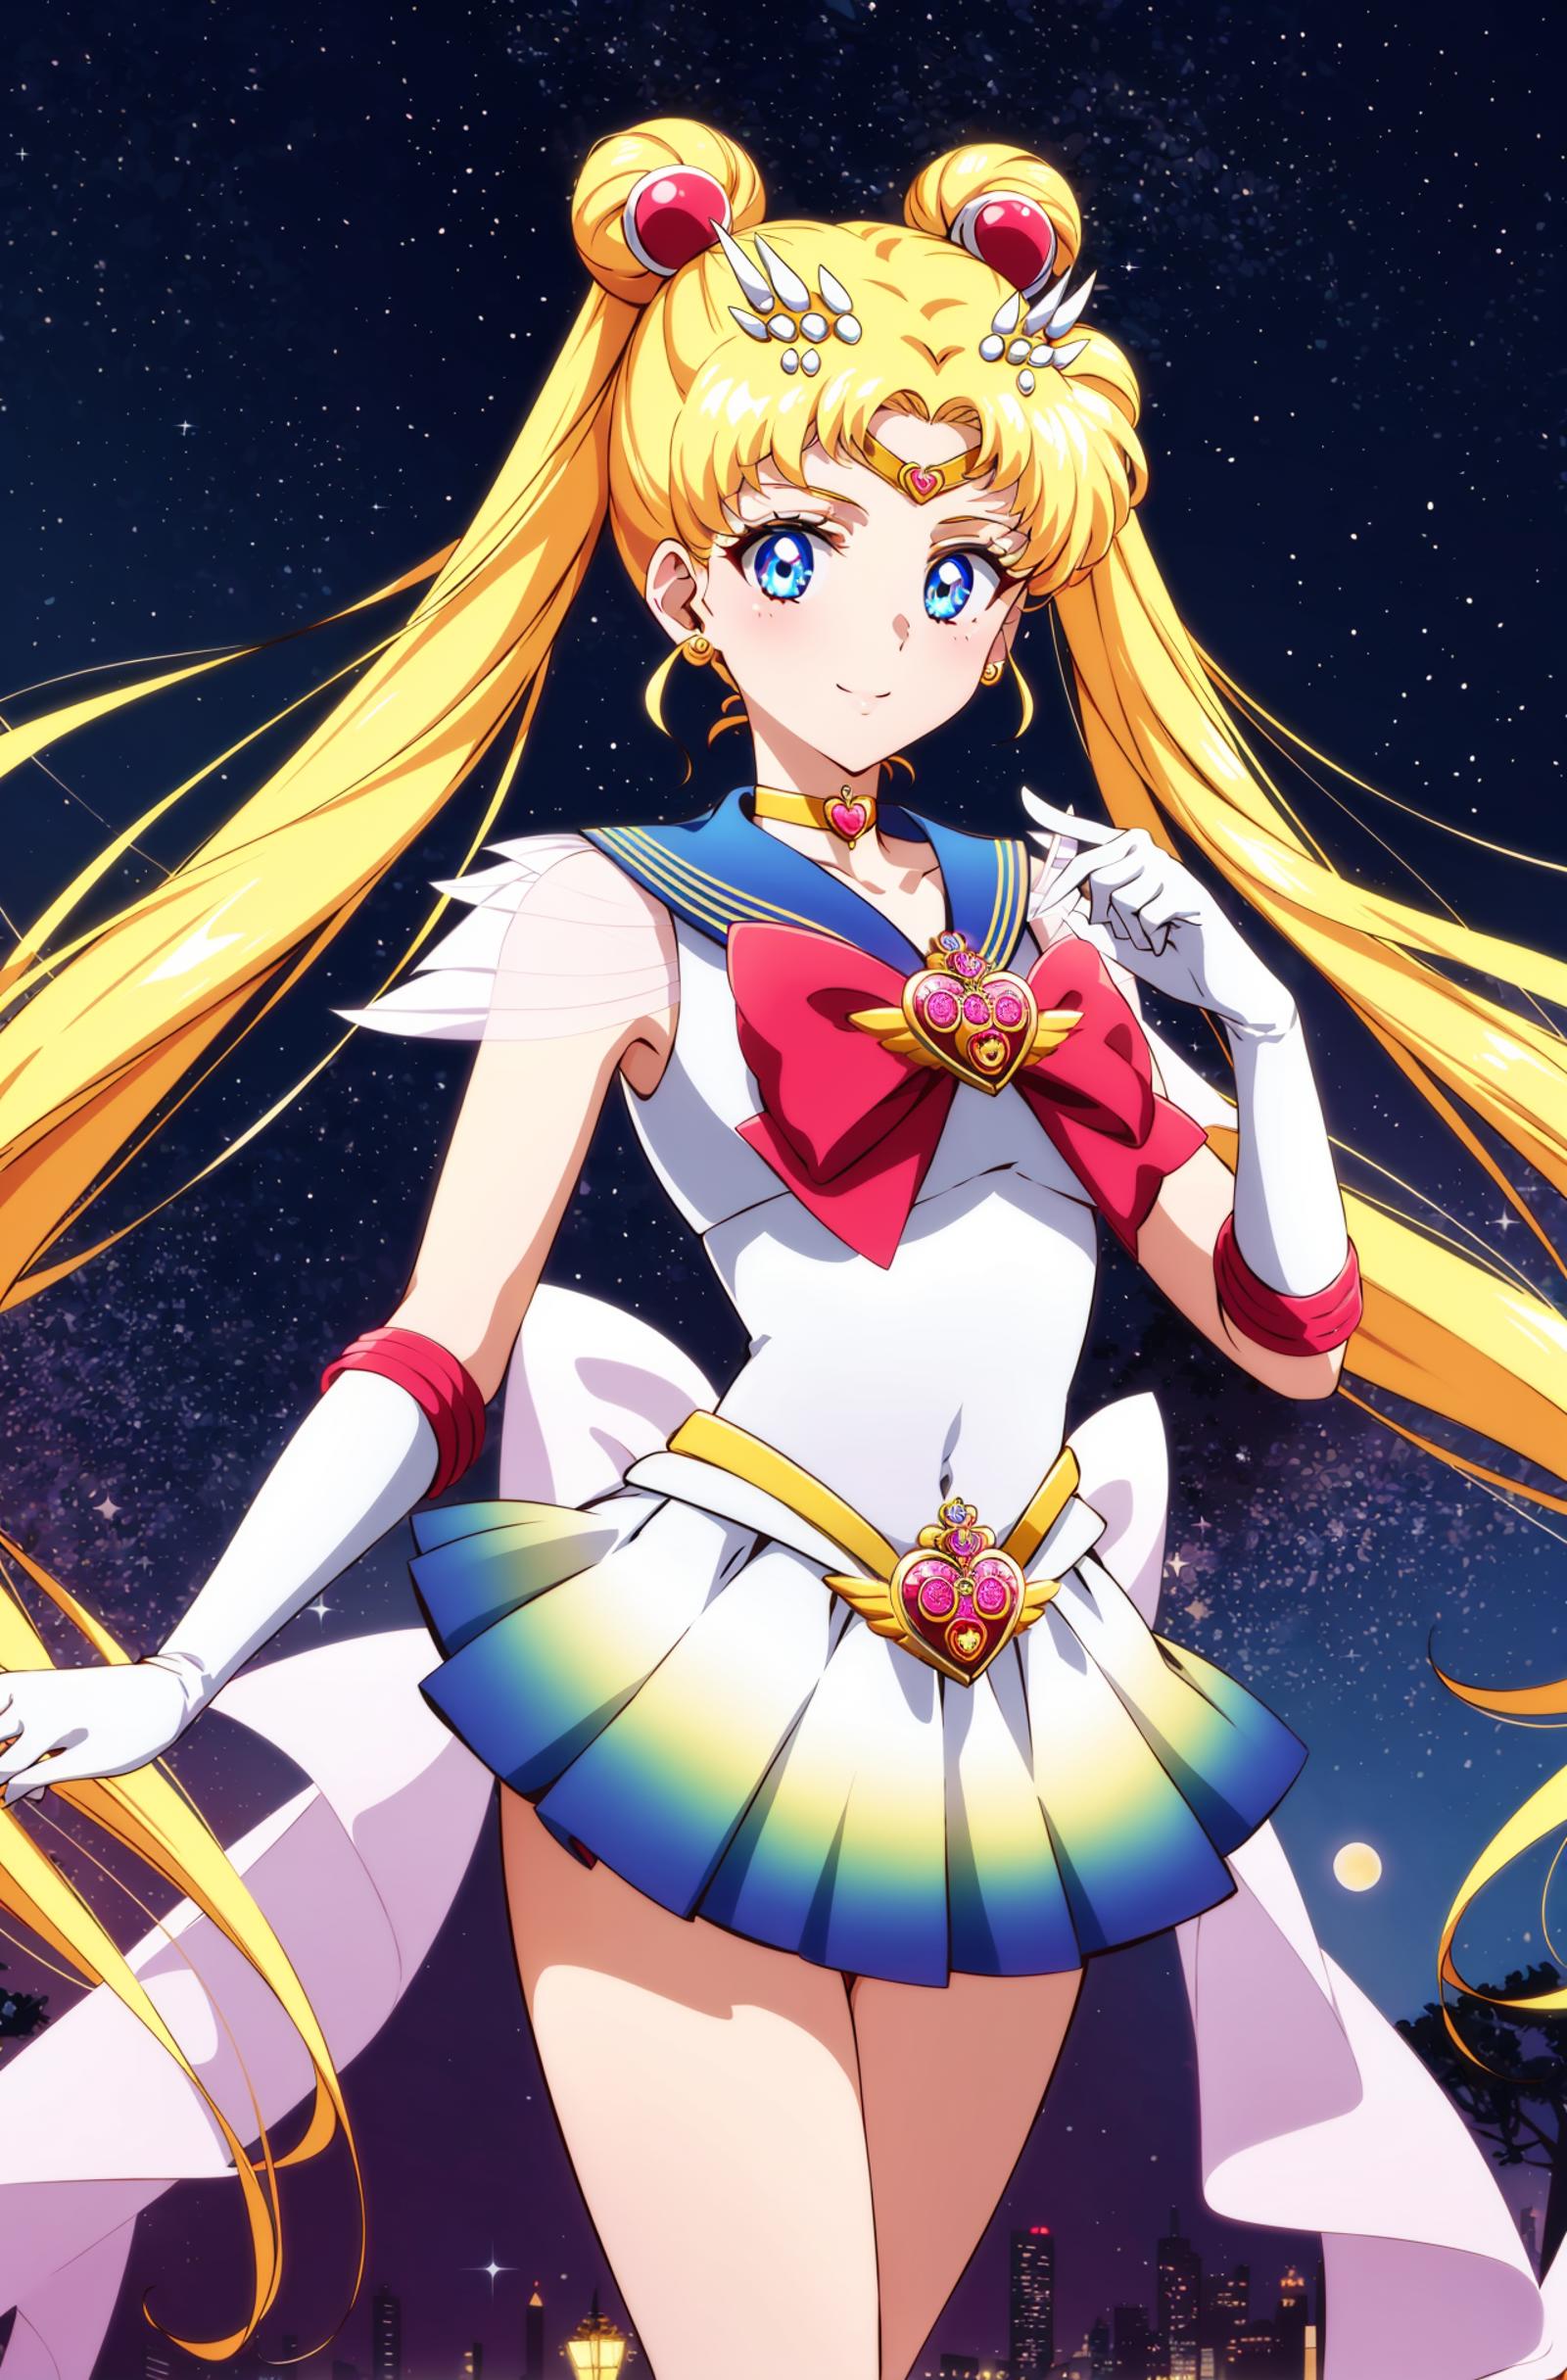 Super Sailor Moon LoRa image by Applejacky